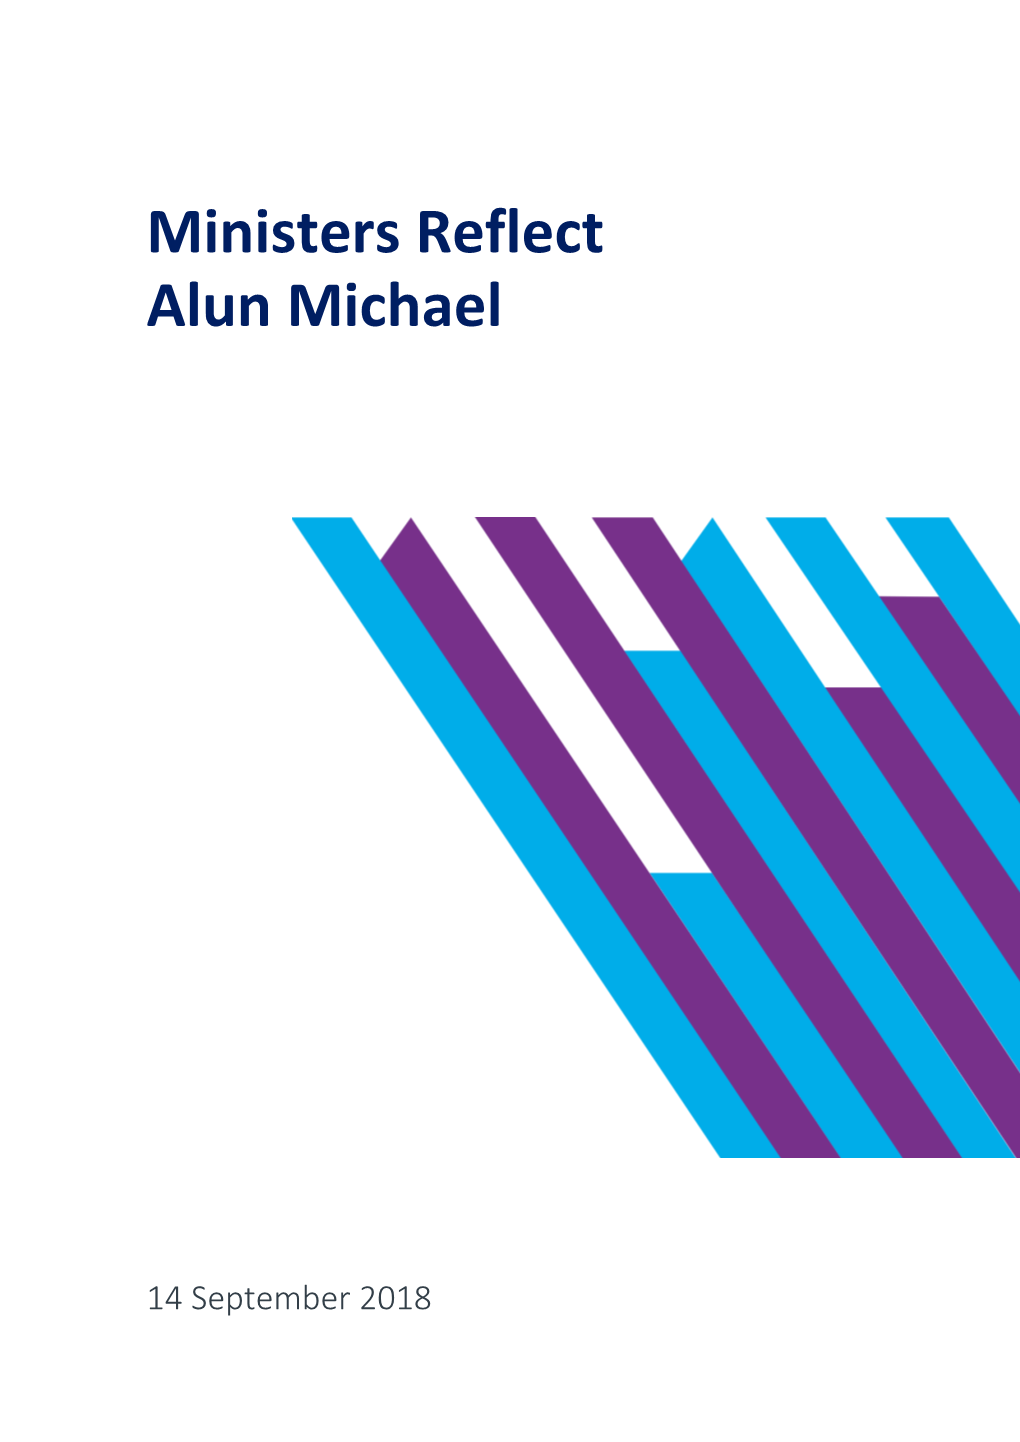 Ministers Reflect Alun Michael